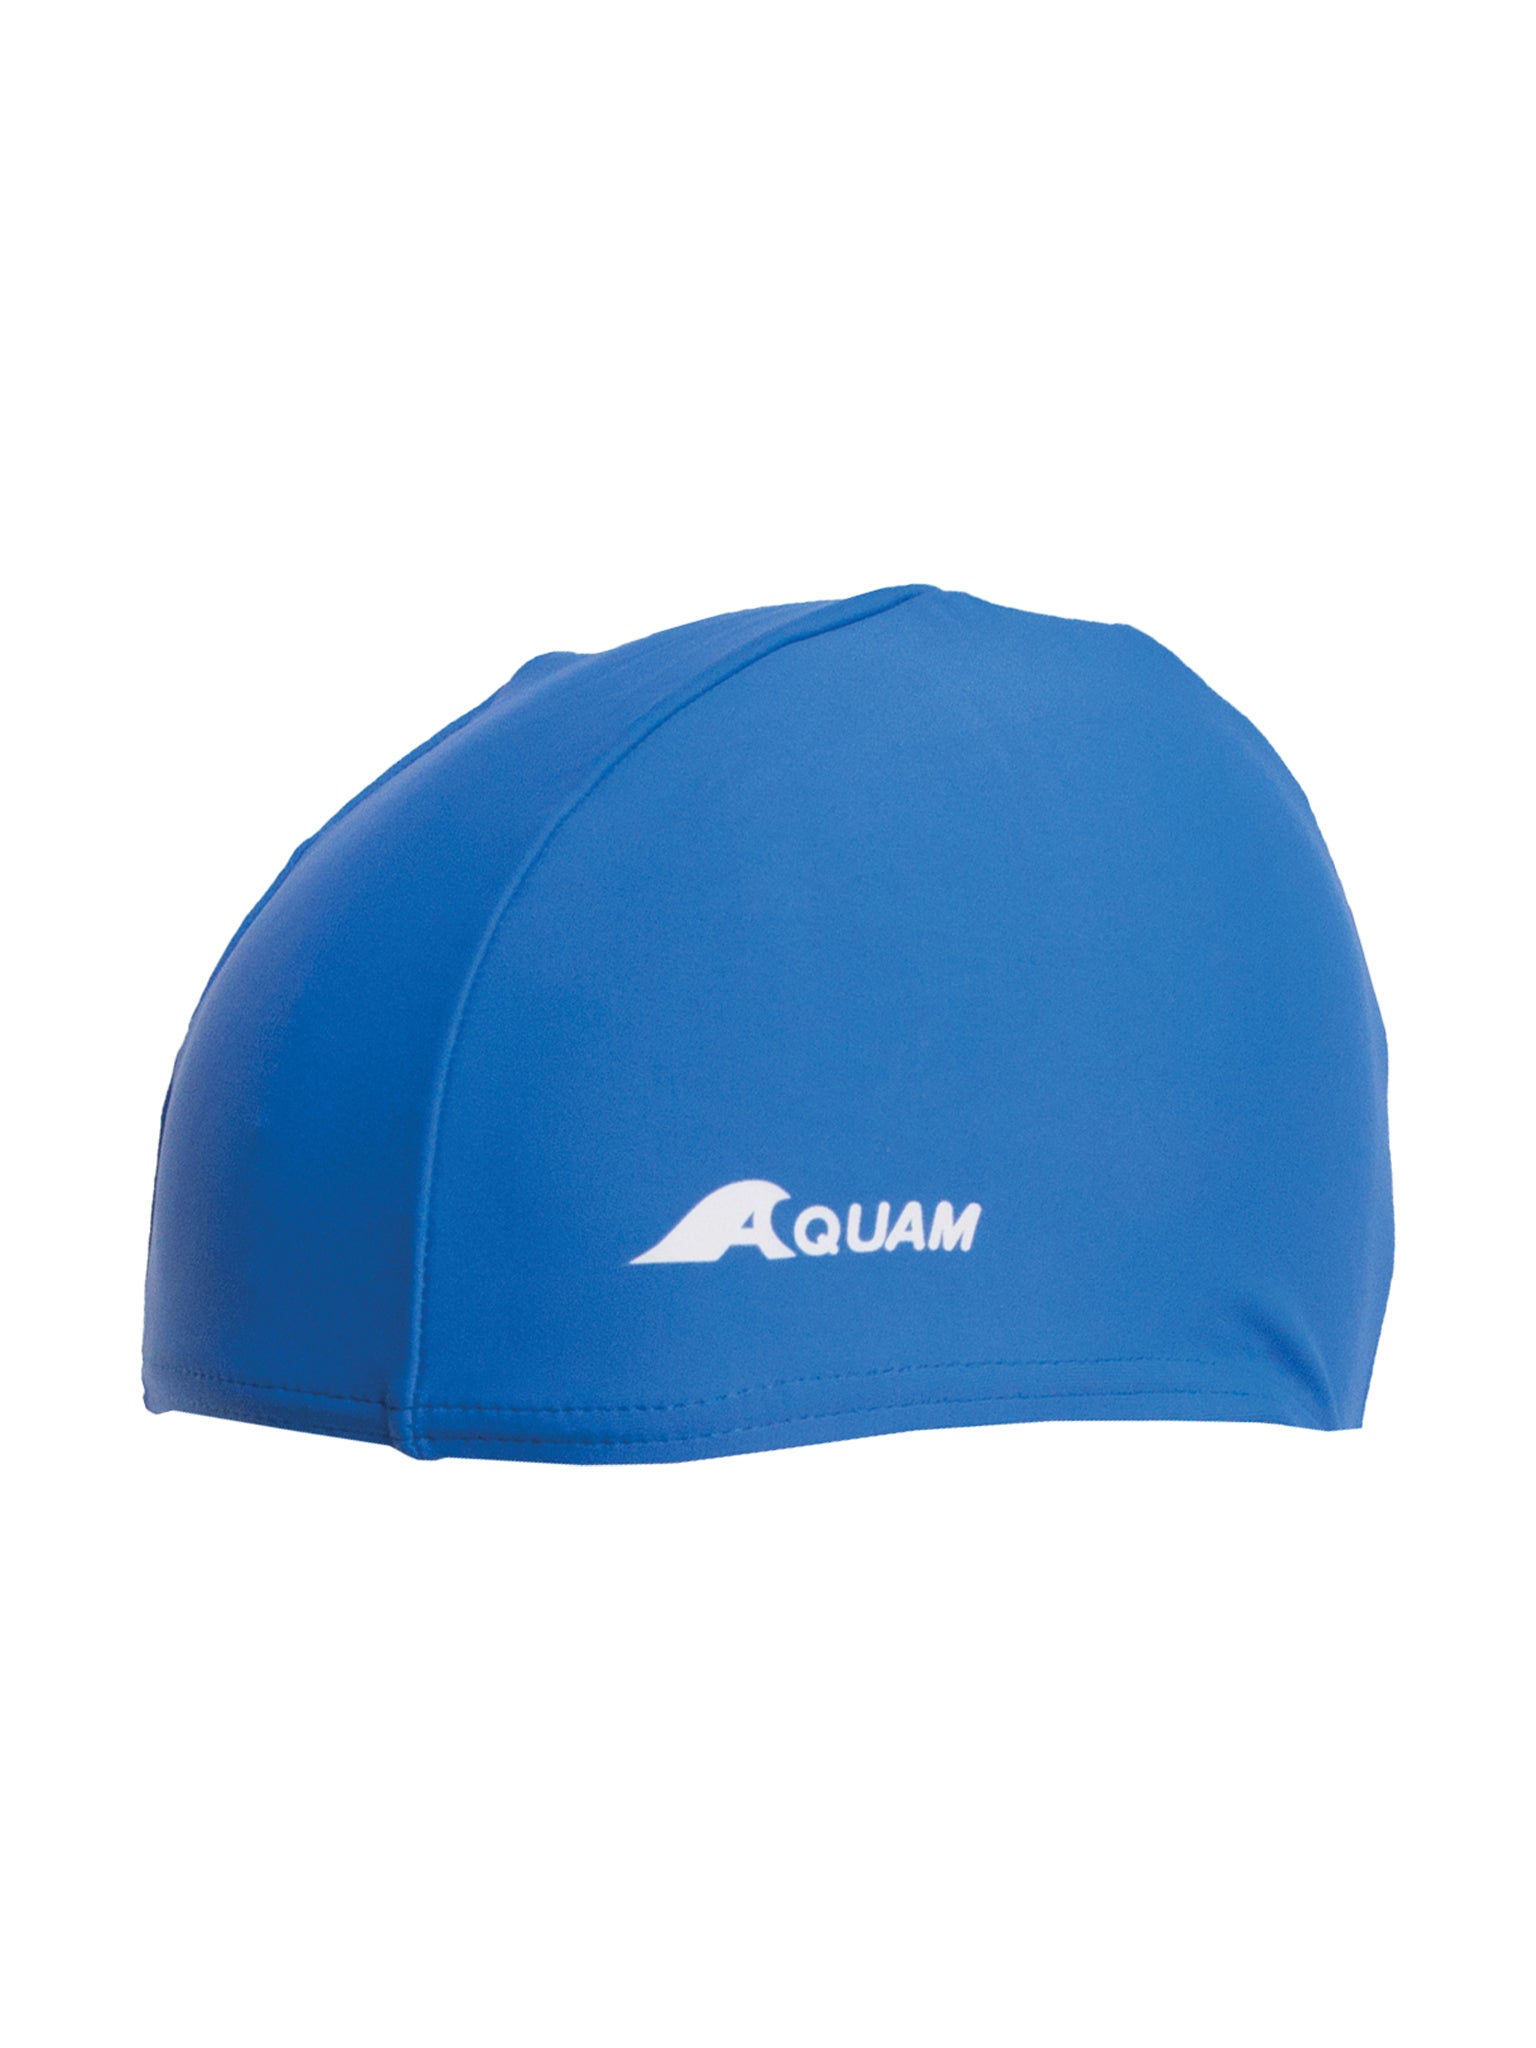 Lycra Swim Cap